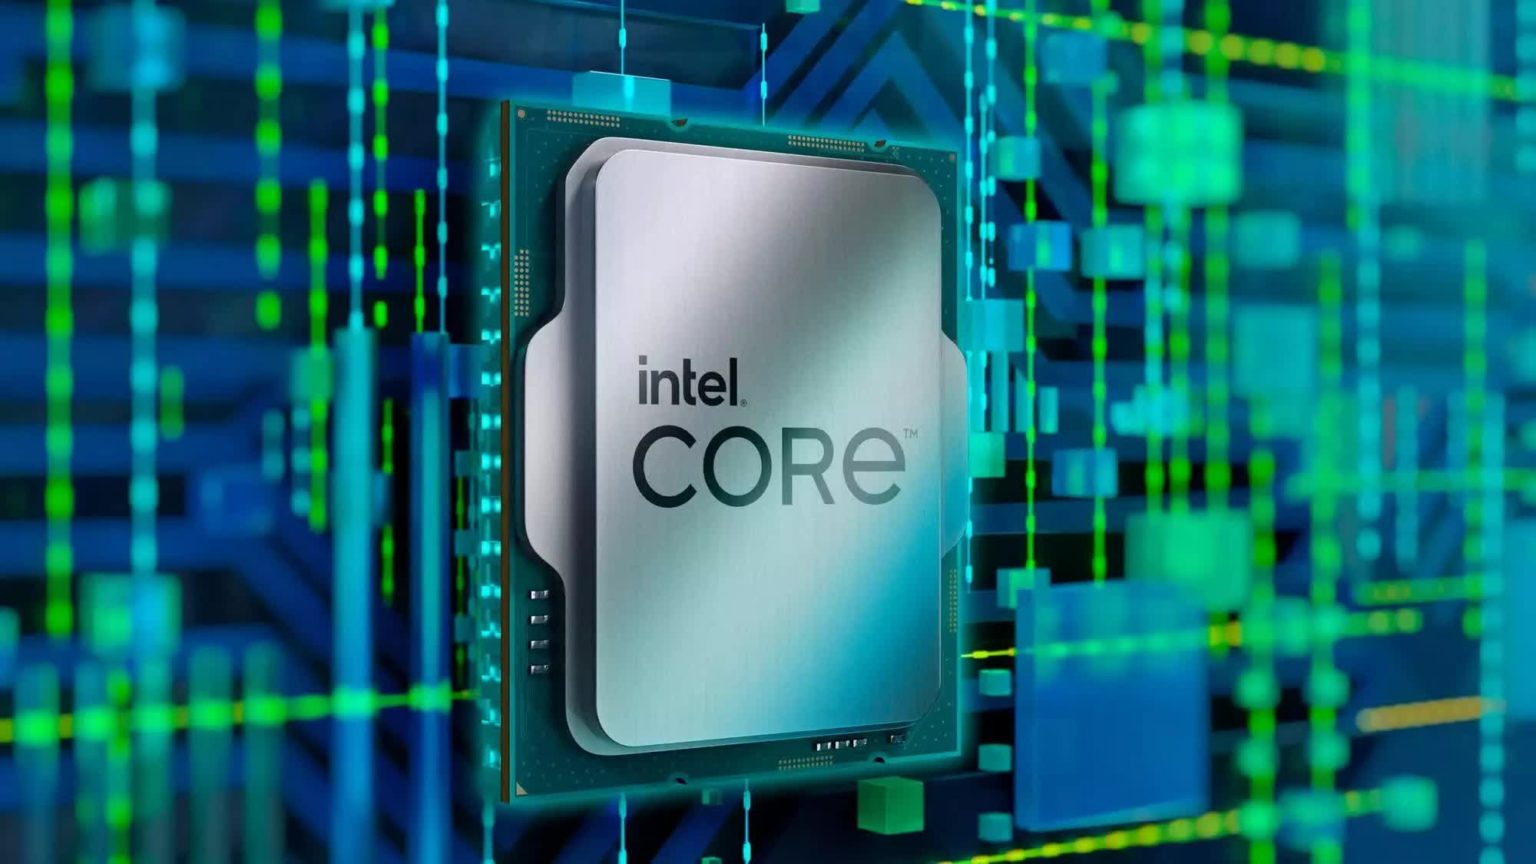 Upcoming Intel Arrow Lake-S and Lunar Lake SKUs revealed through CPU-Z listings